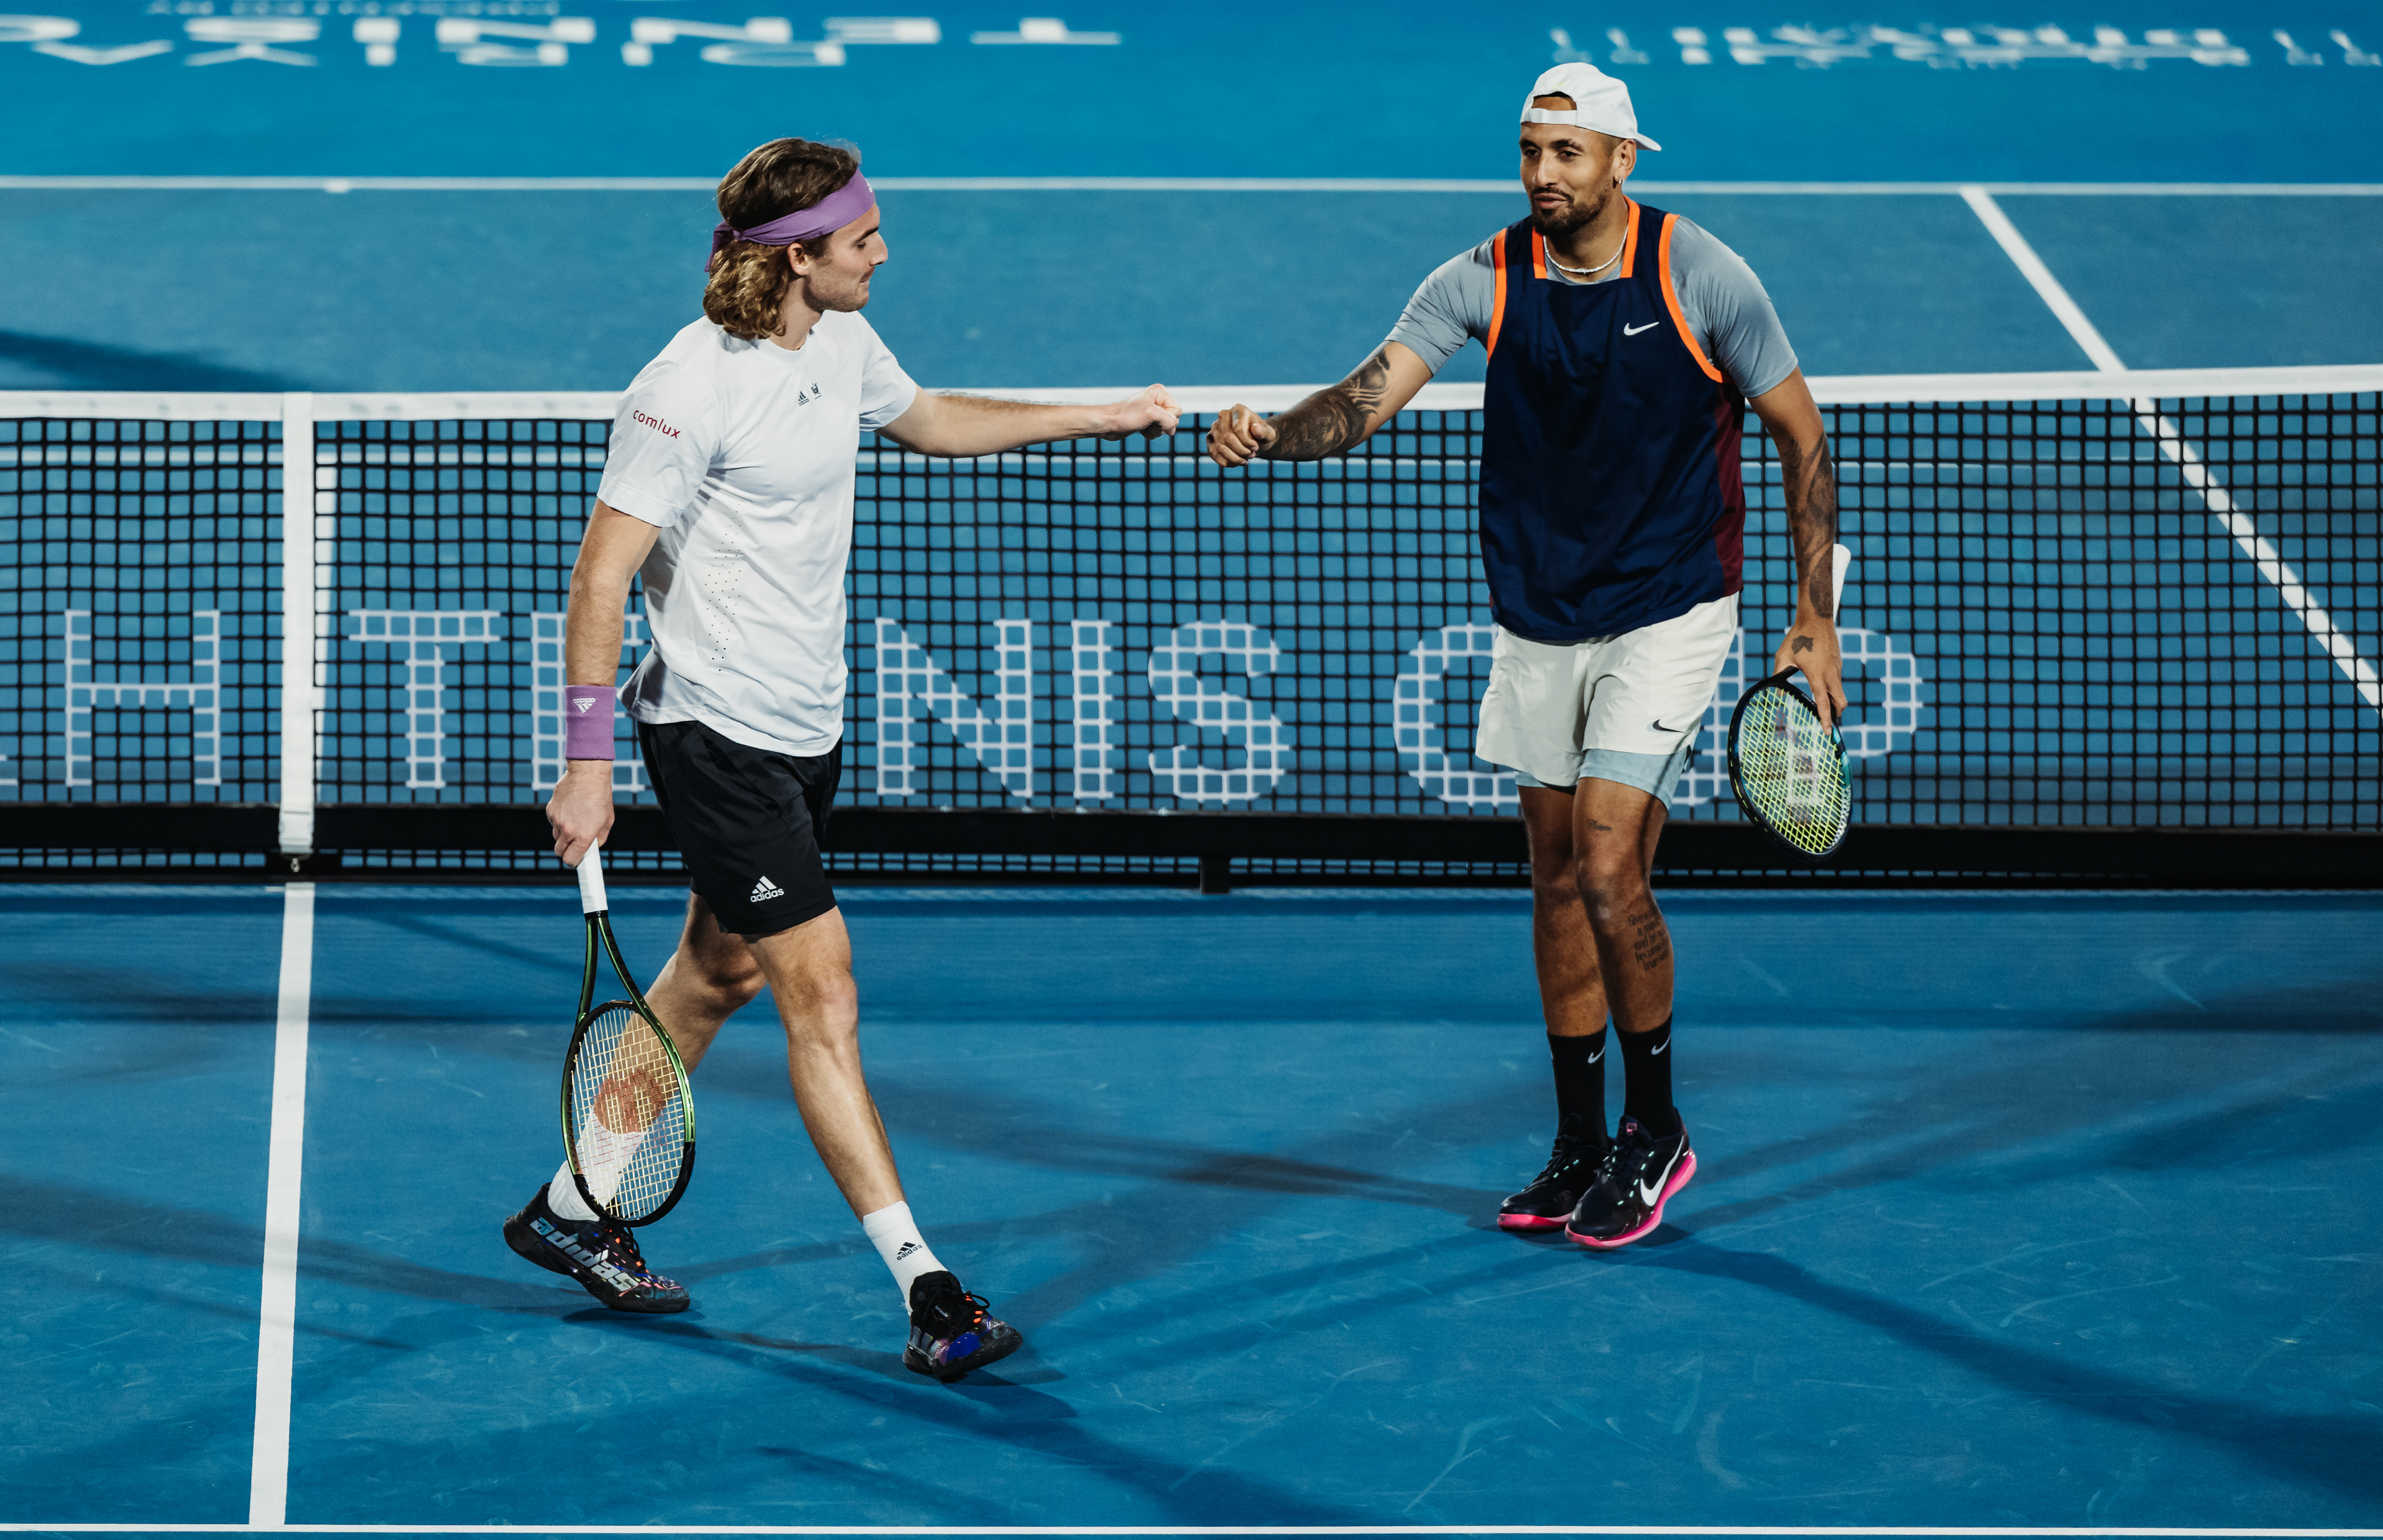 Tenis news 2022 Nick Kyrgios and Stefanos Tsitsipas team up in Diriyah Tennis Cup doubles